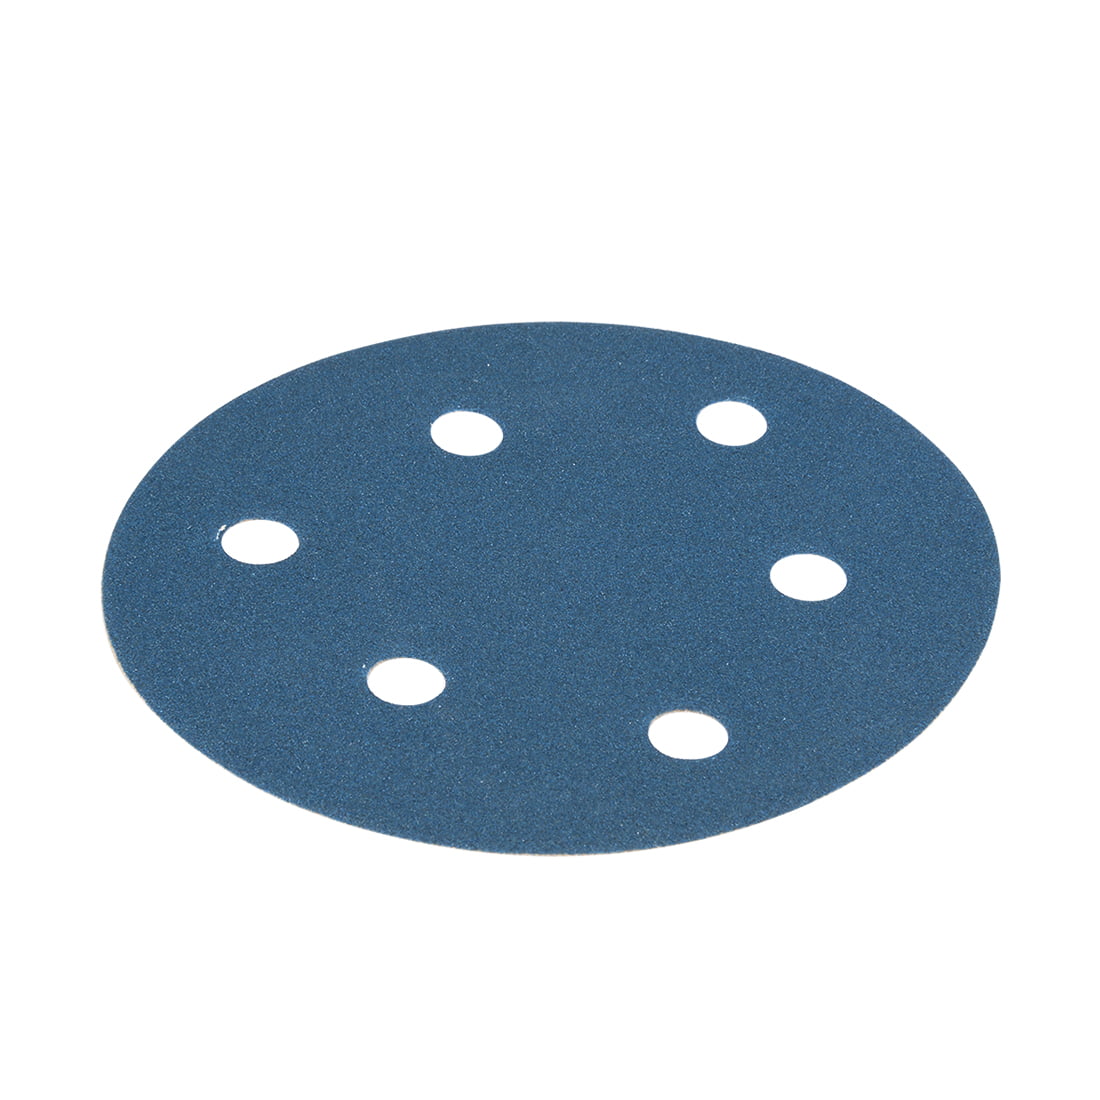 uxcell 10Pcs 5 Inch Hook and Loop Sanding Disc 150 Grits Flocking Sandpaper Random Orbital Sander Paper Blue